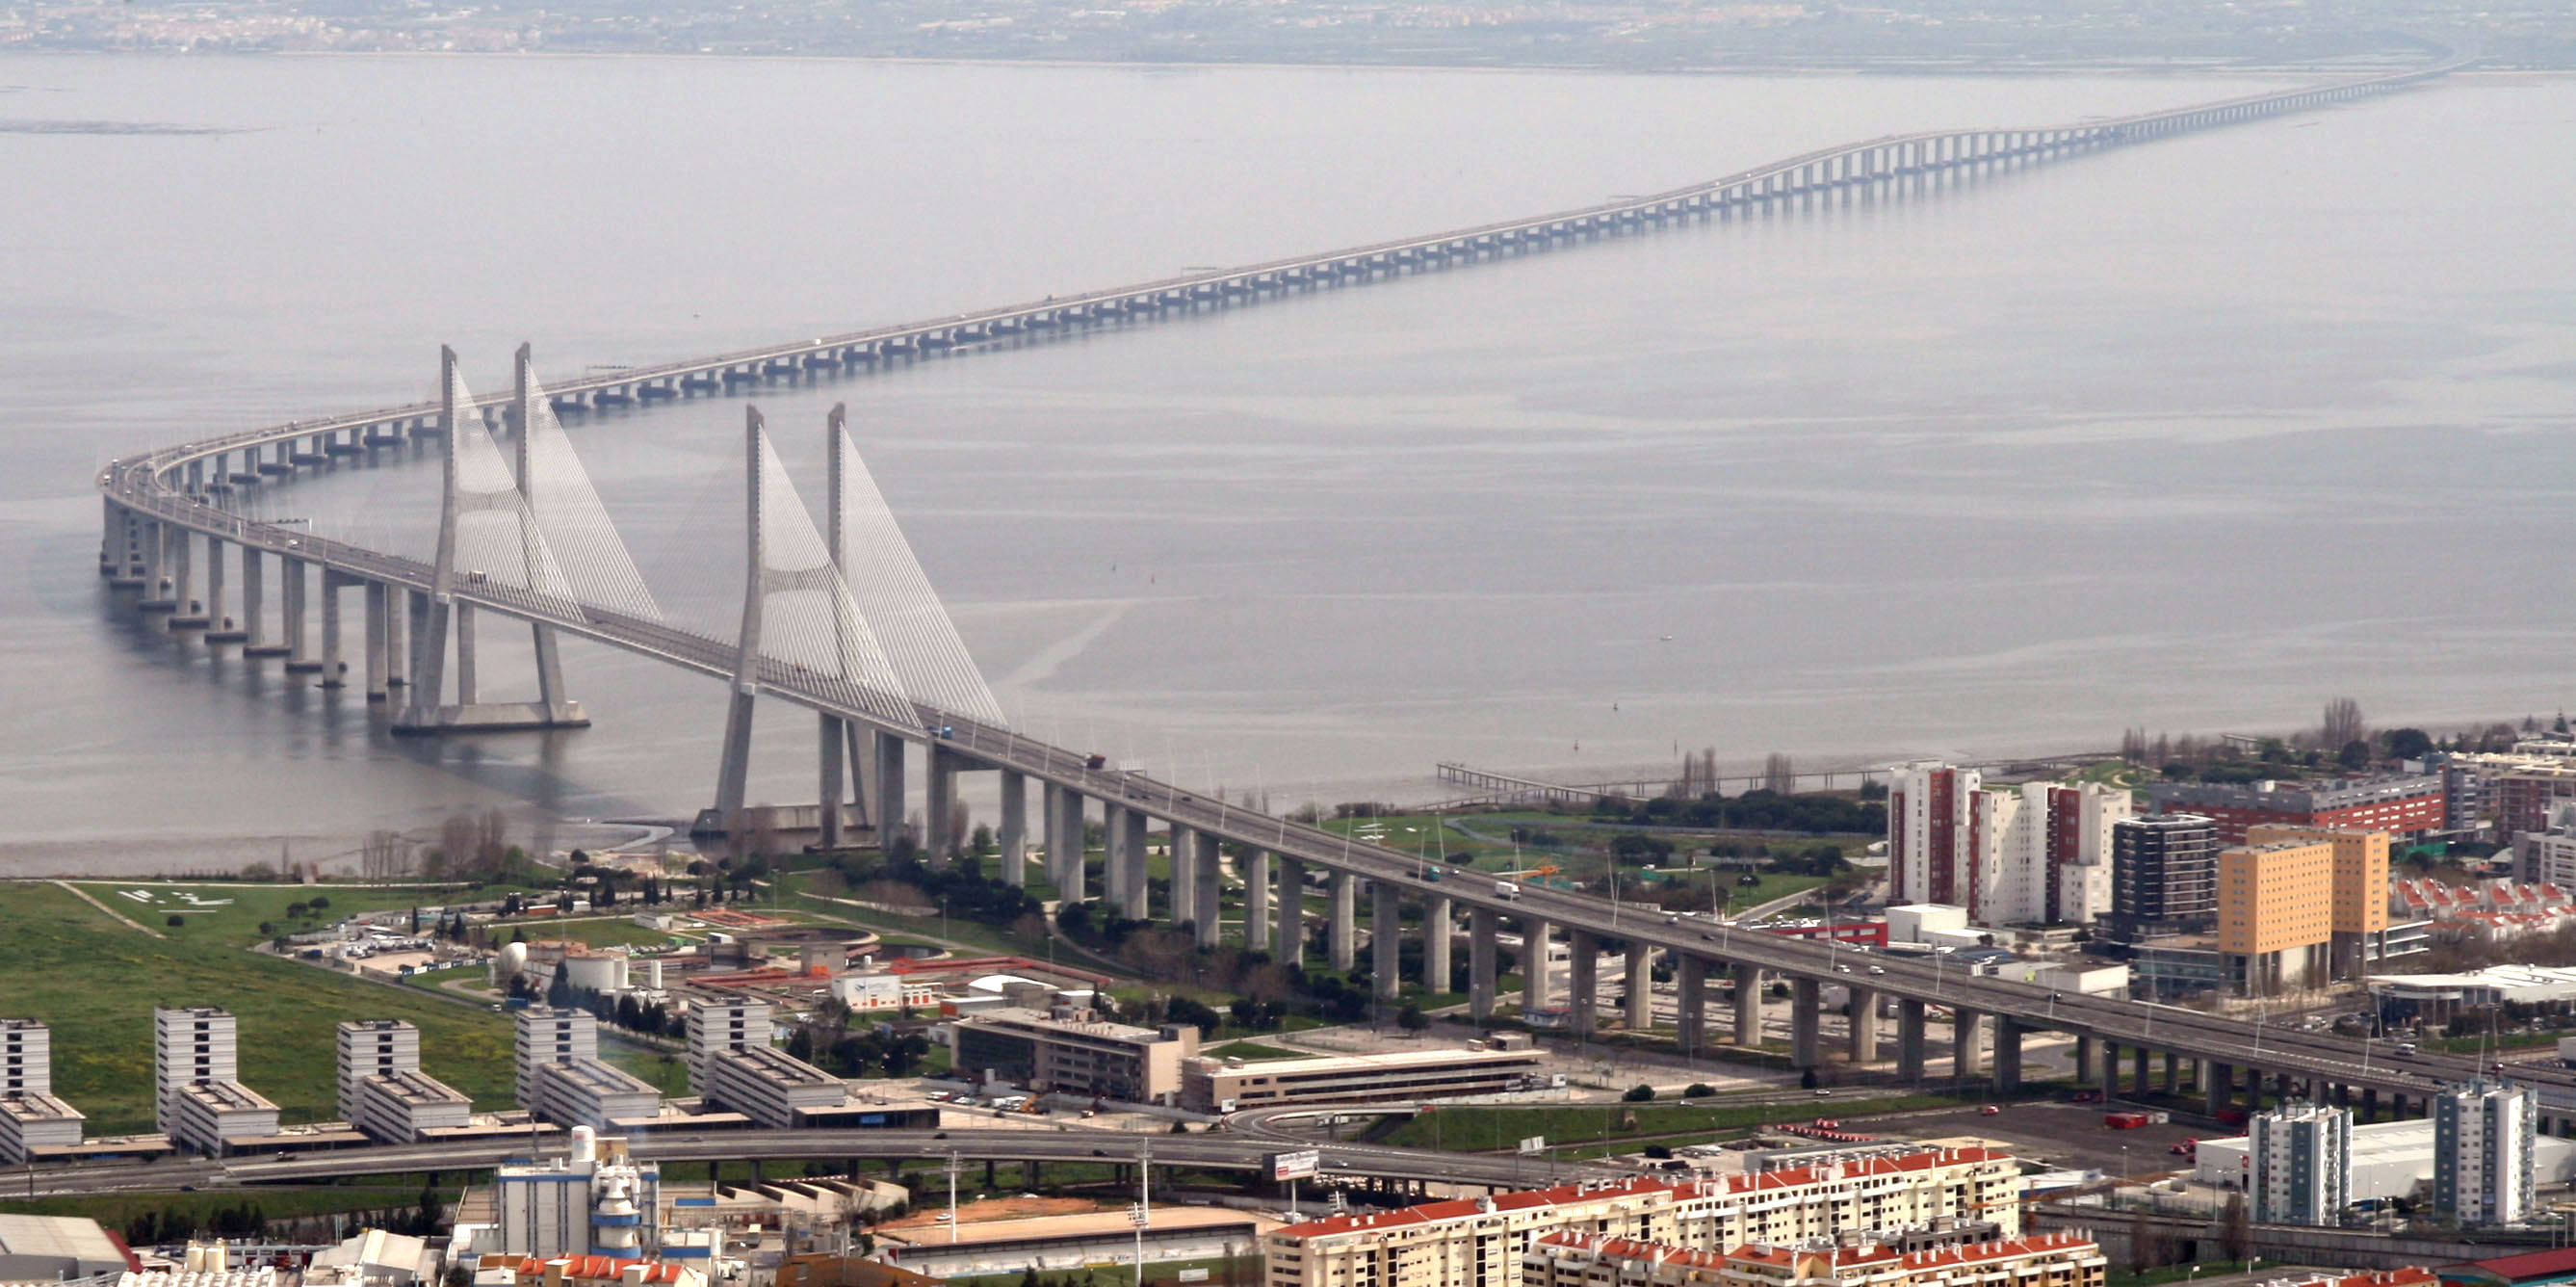 Vasco_da_Gama_Bridge_aerial_view.jpg